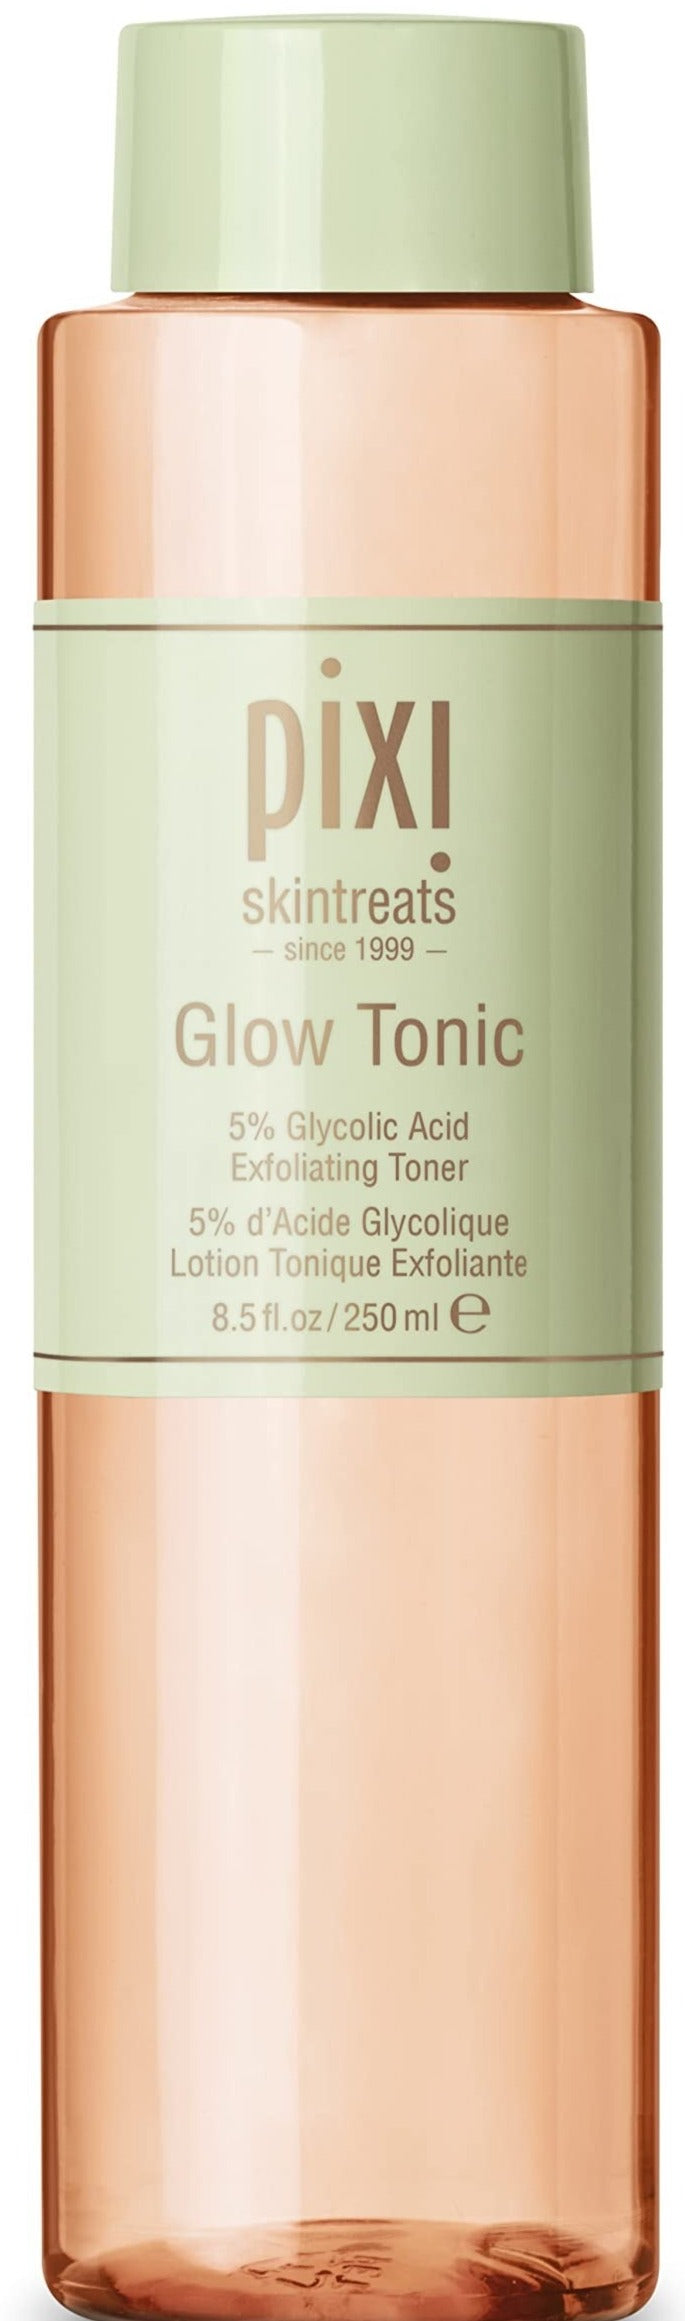 Pixi Glow Tonic Exfoliating Toner - MeStore